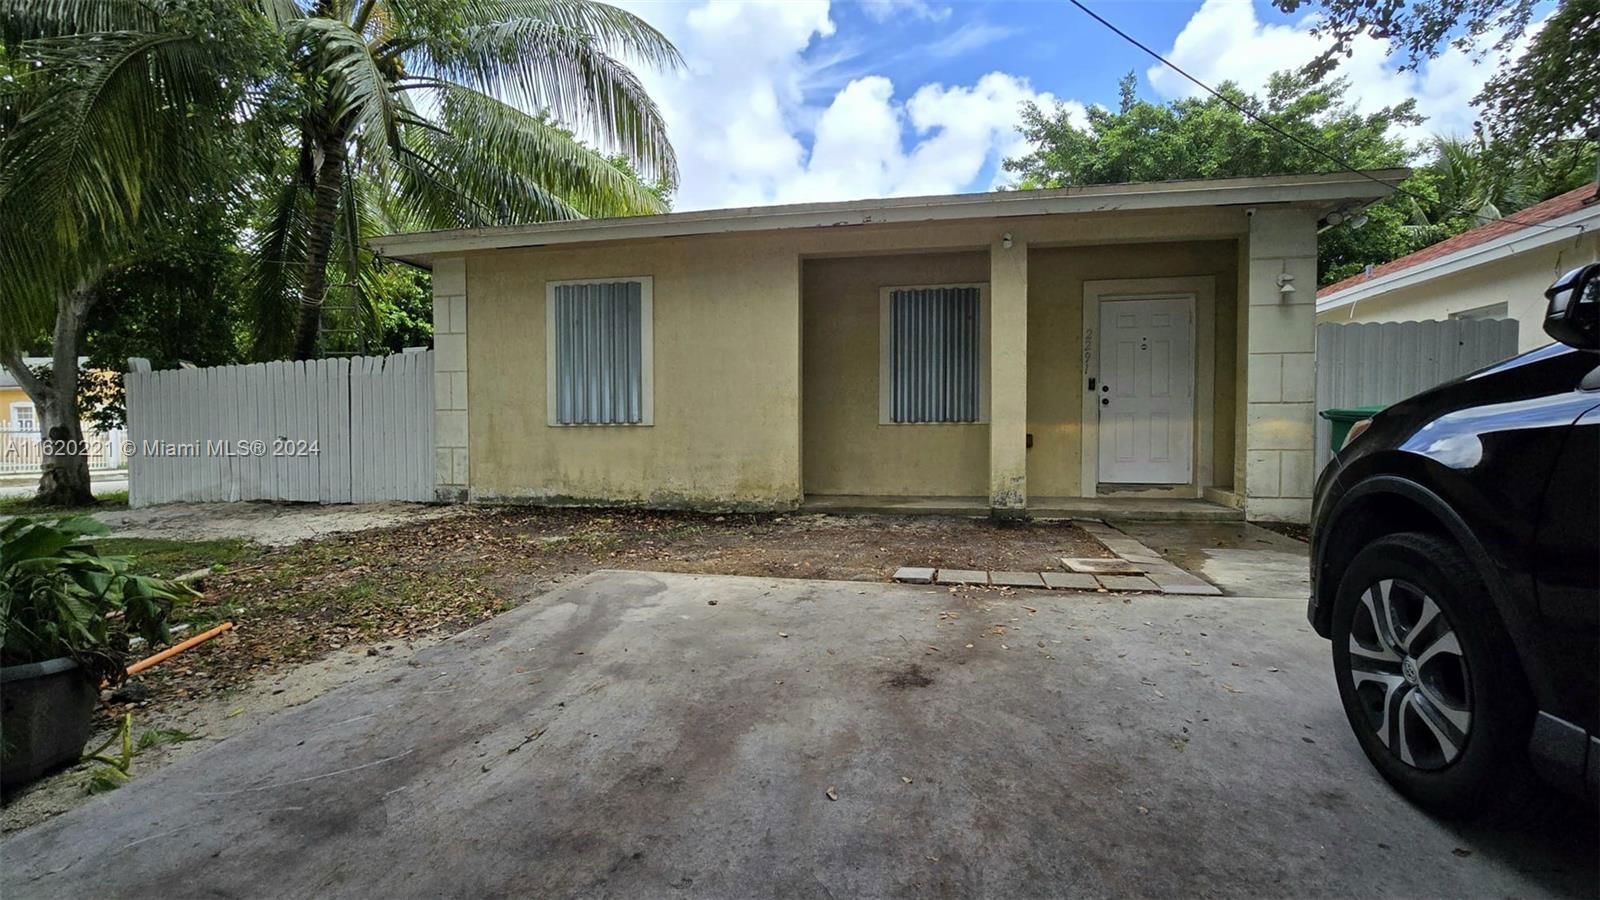 Real estate property located at 2291 87th St, Miami-Dade County, N RIDGEWAY PK, Miami, FL